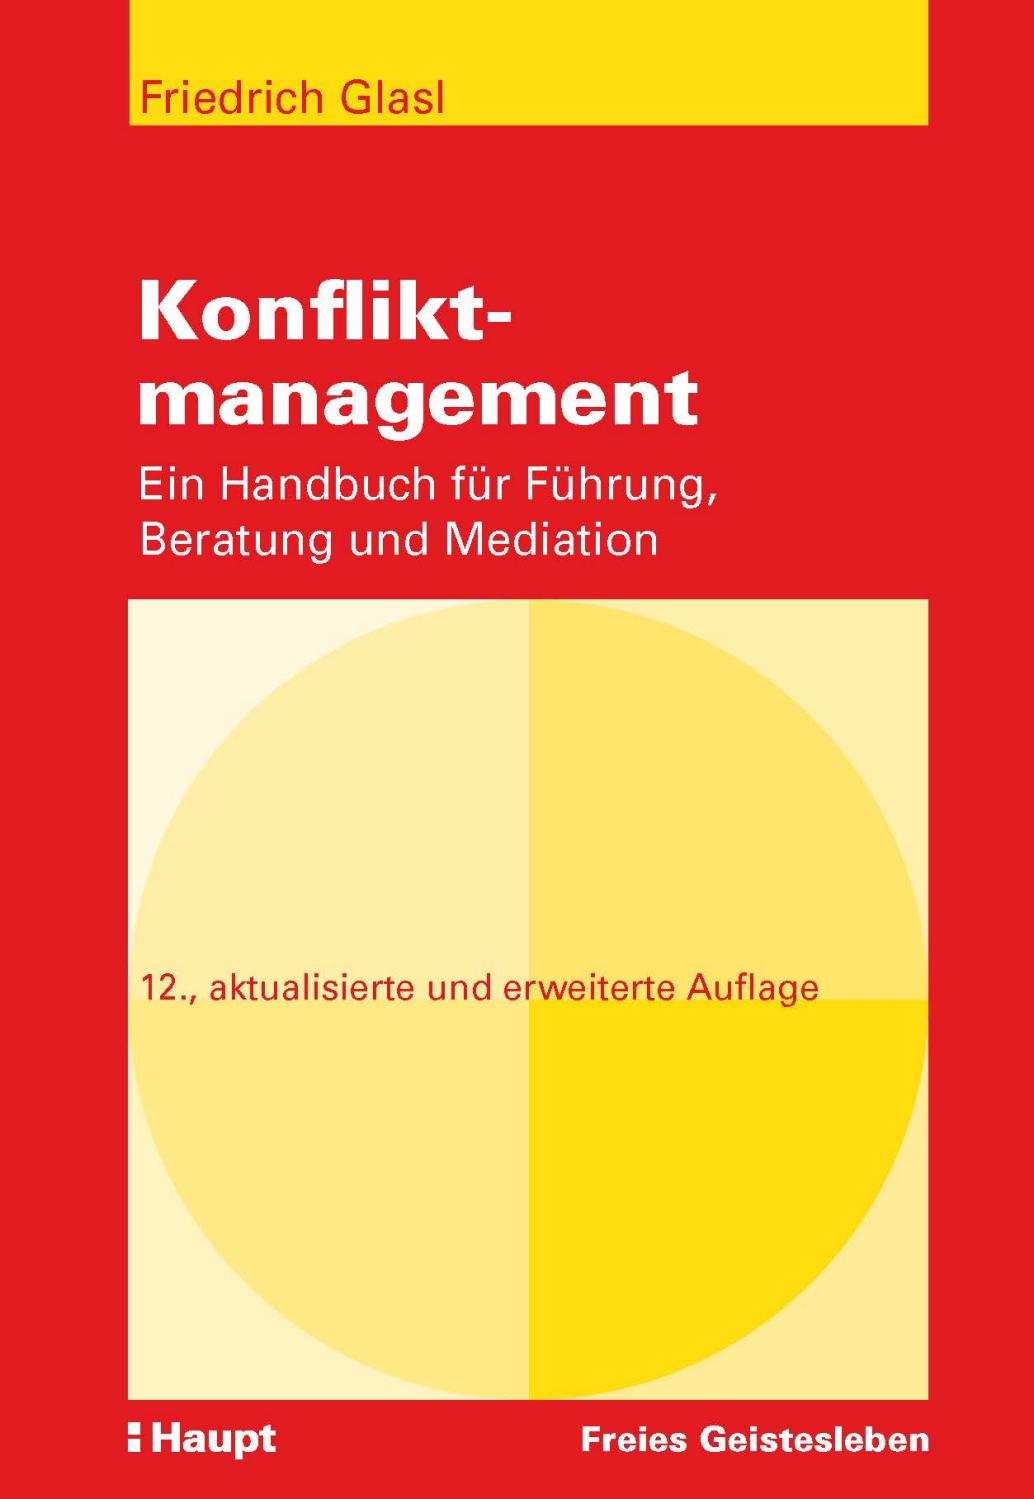 Glasl Konfliktmanagement 12 A By Haupt Verlag Issuu